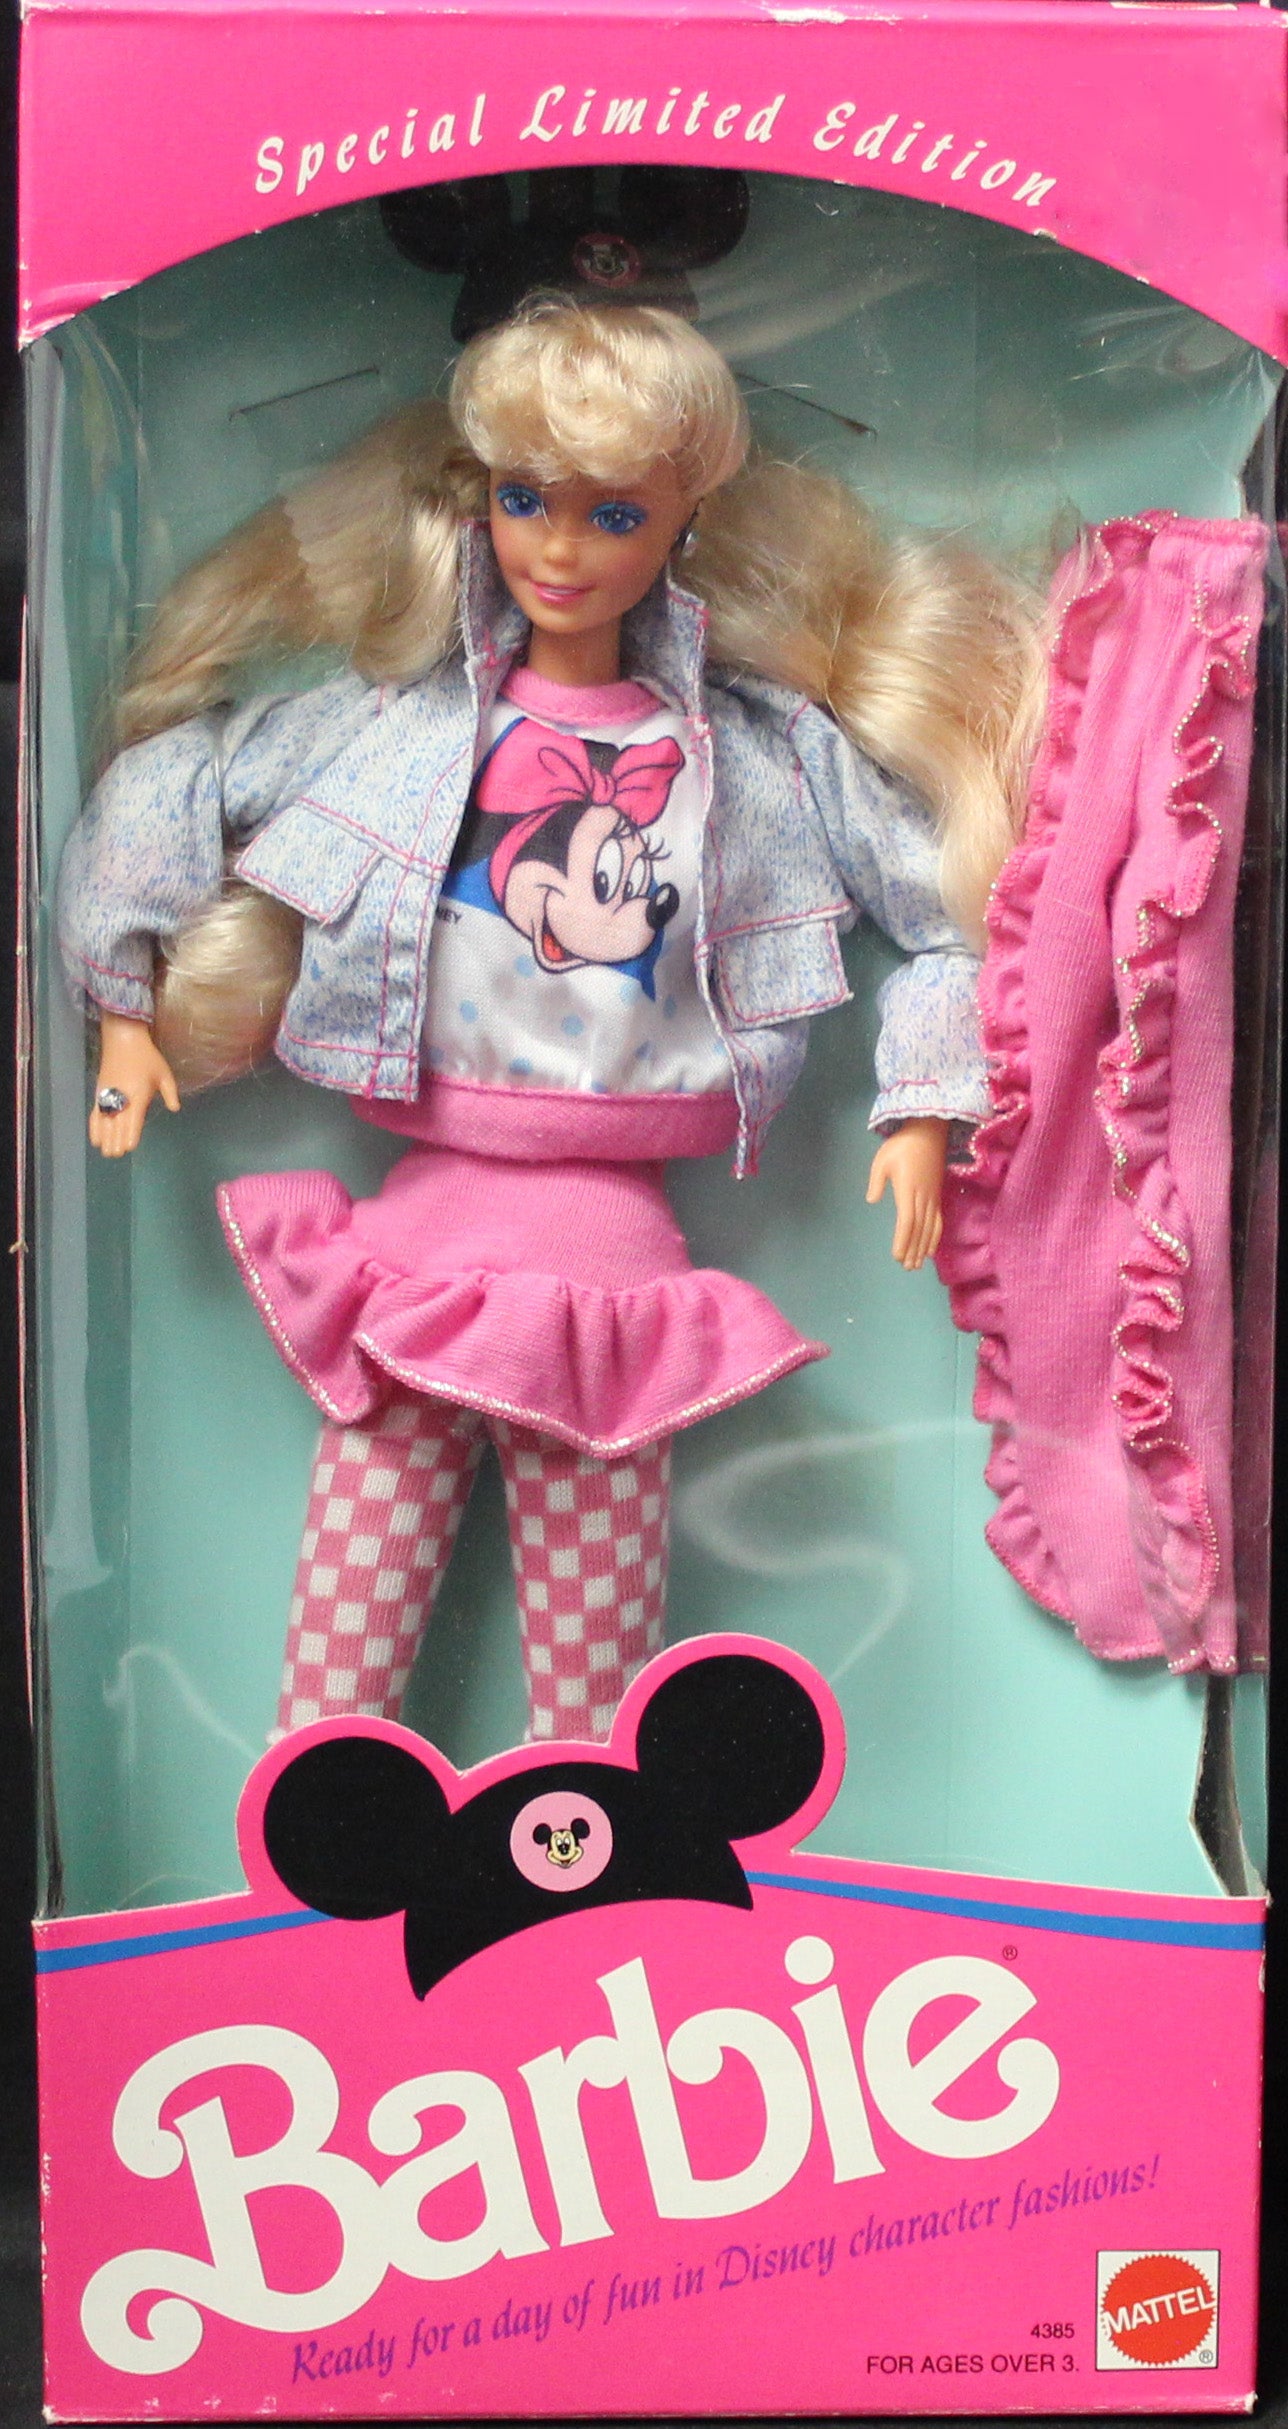 Barbie 4385 MIB 1990 Barbie Ready for Disney Special Limited